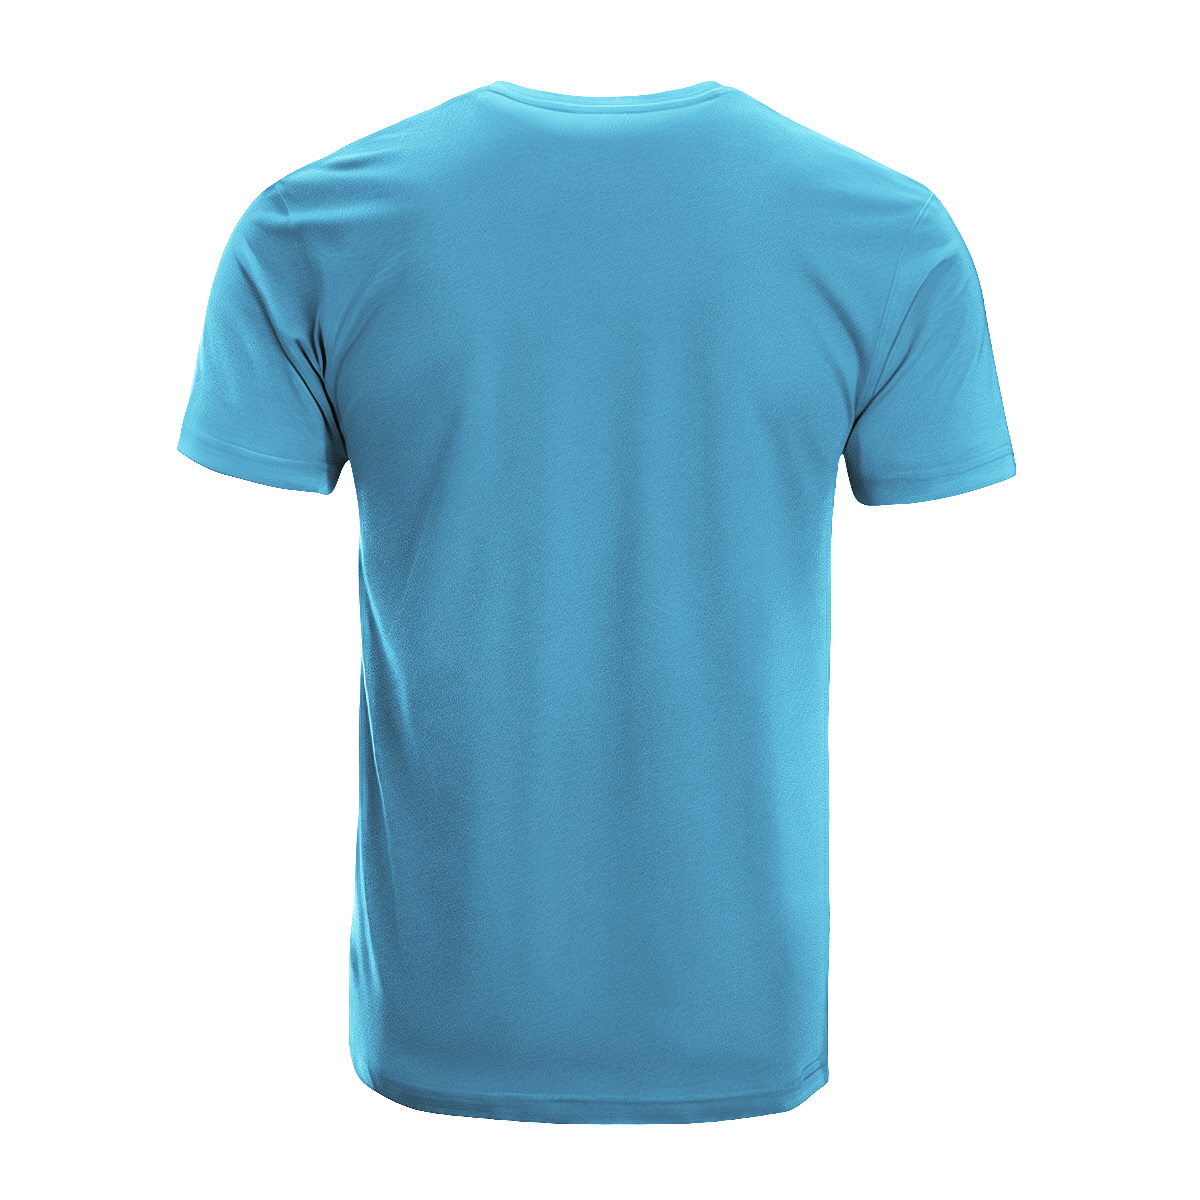 Sempill Tartan Crest T-shirt - I'm not yelling style